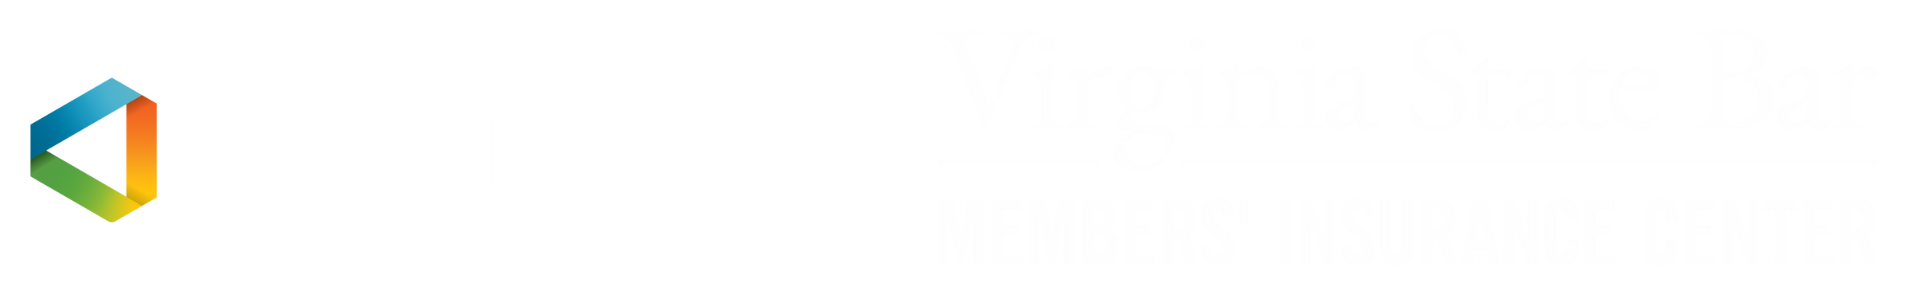 Virginia State Bar Members’ Insurance Center (VSBMIC)